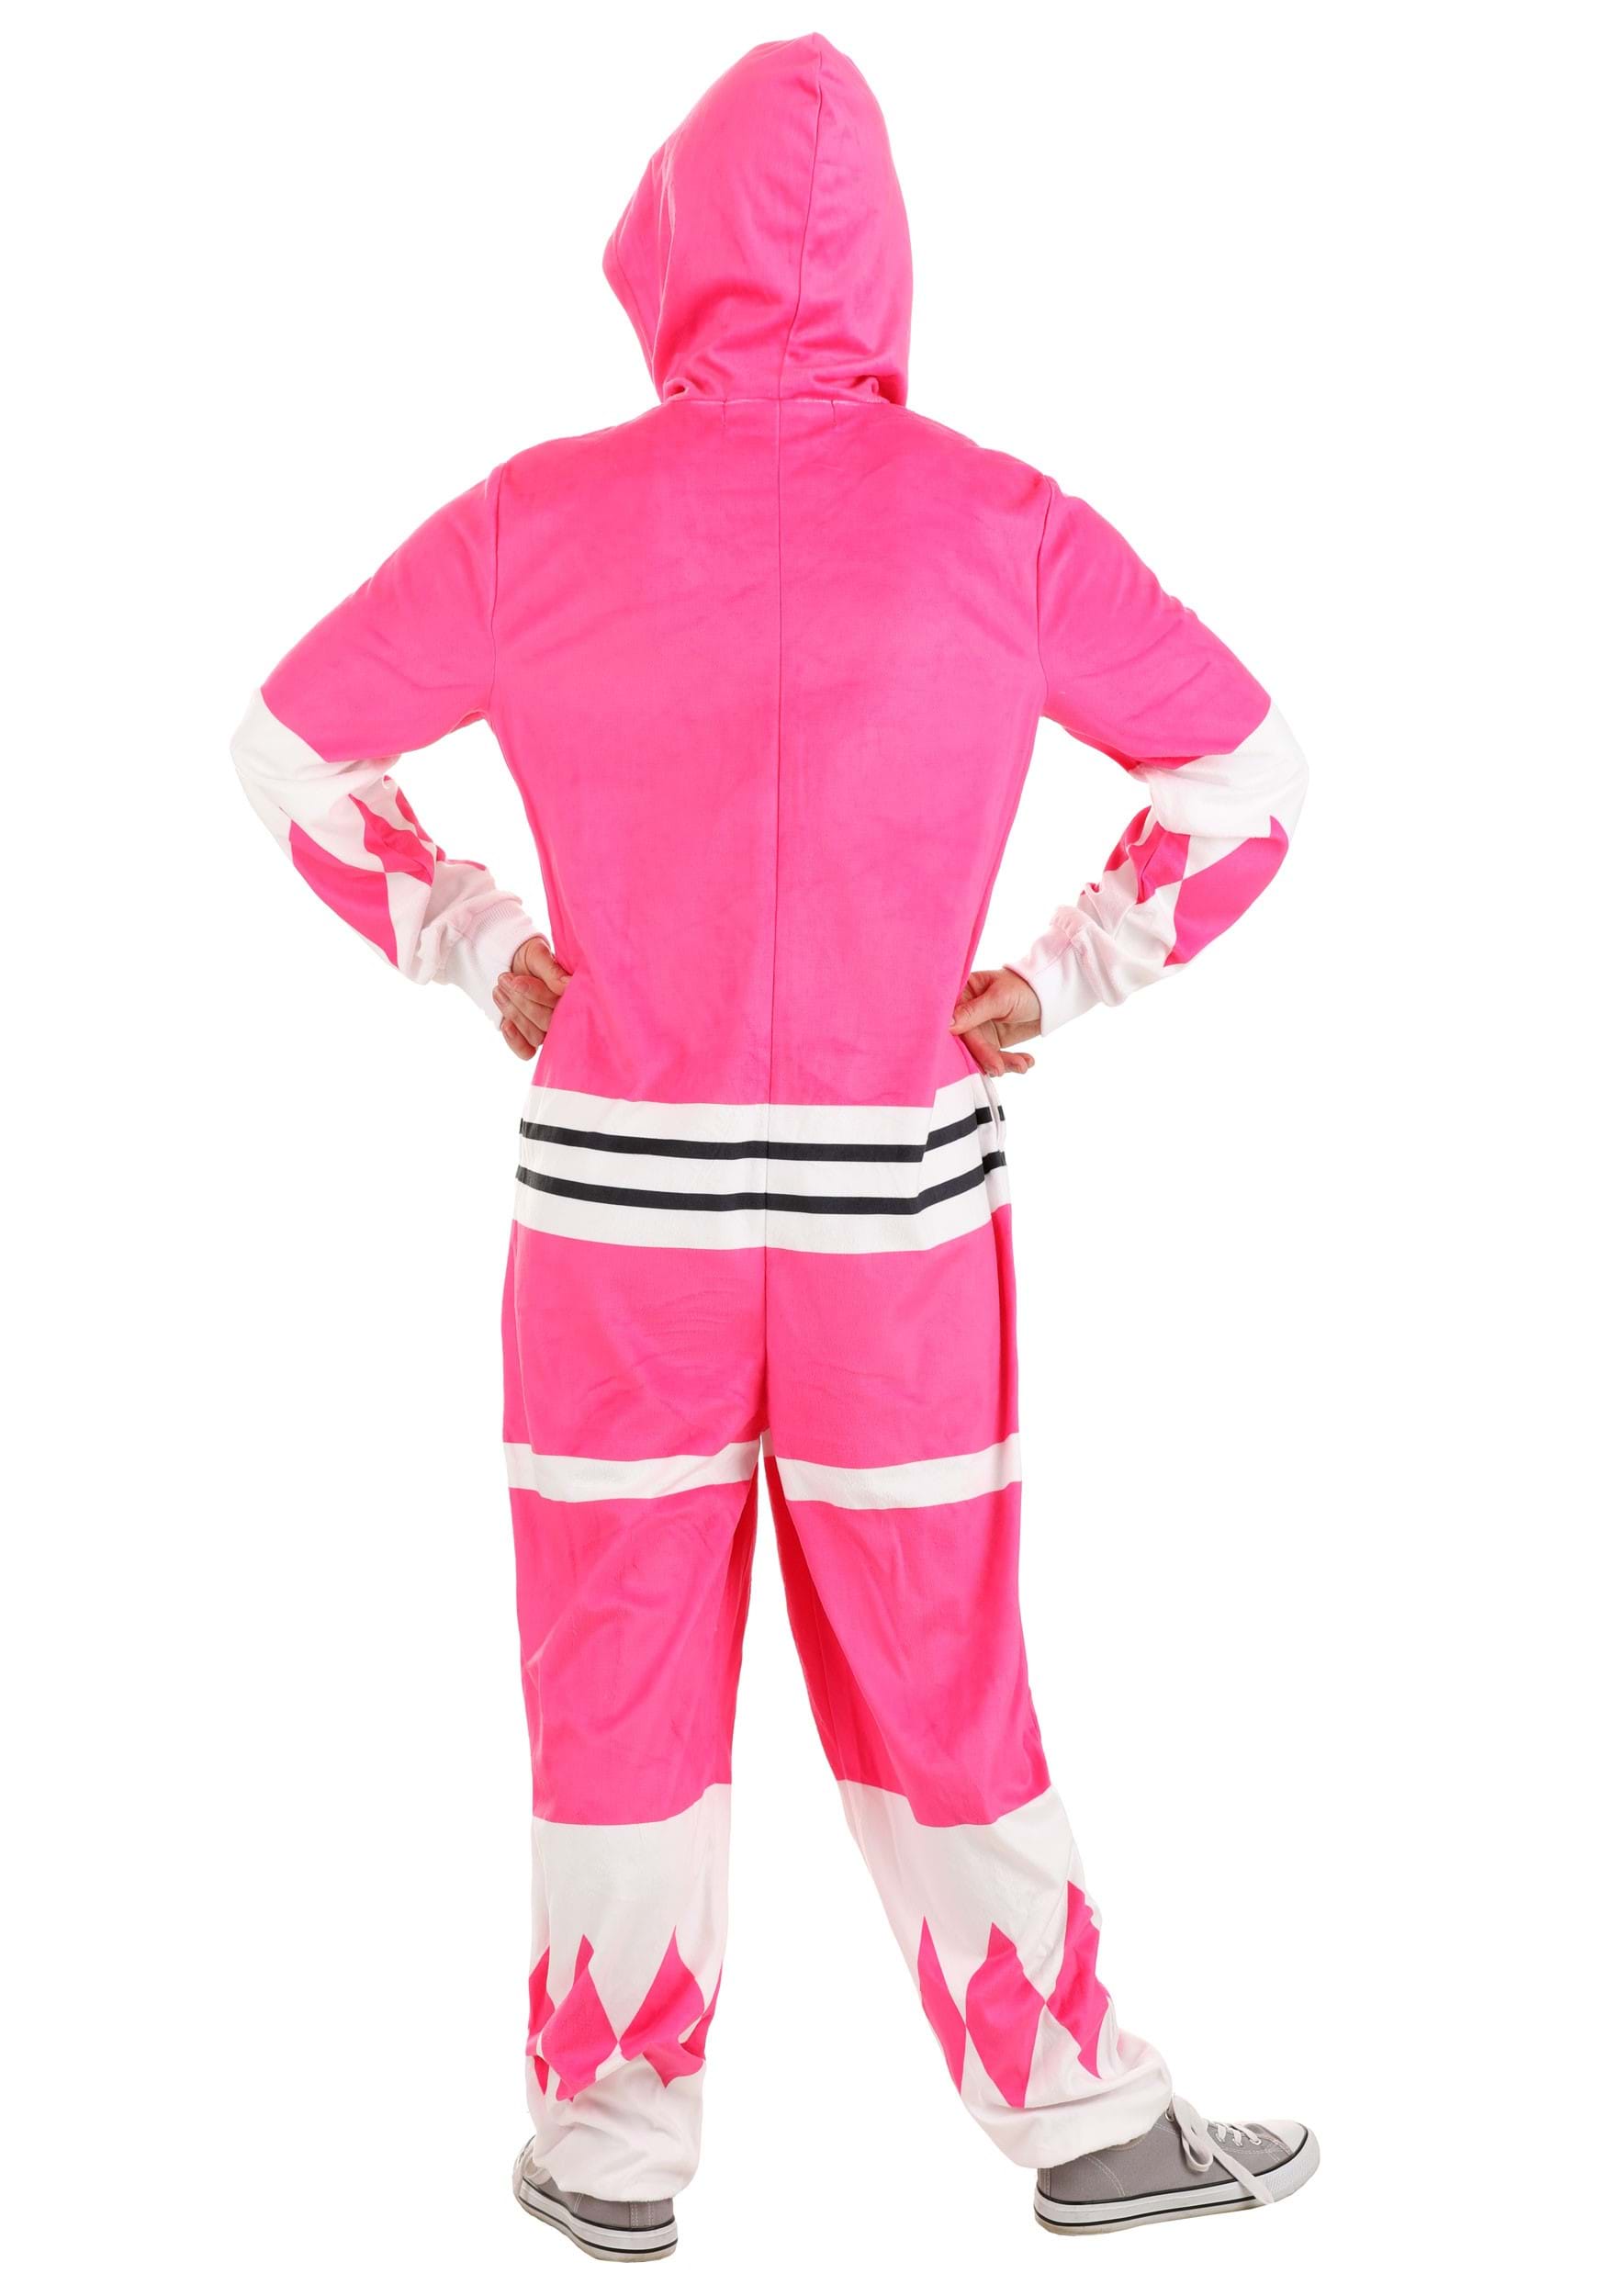 https://images.fun.com/products/87265/2-1-252770/power-rangers-pink-ranger-hooded-union-suit-alt-1.jpg